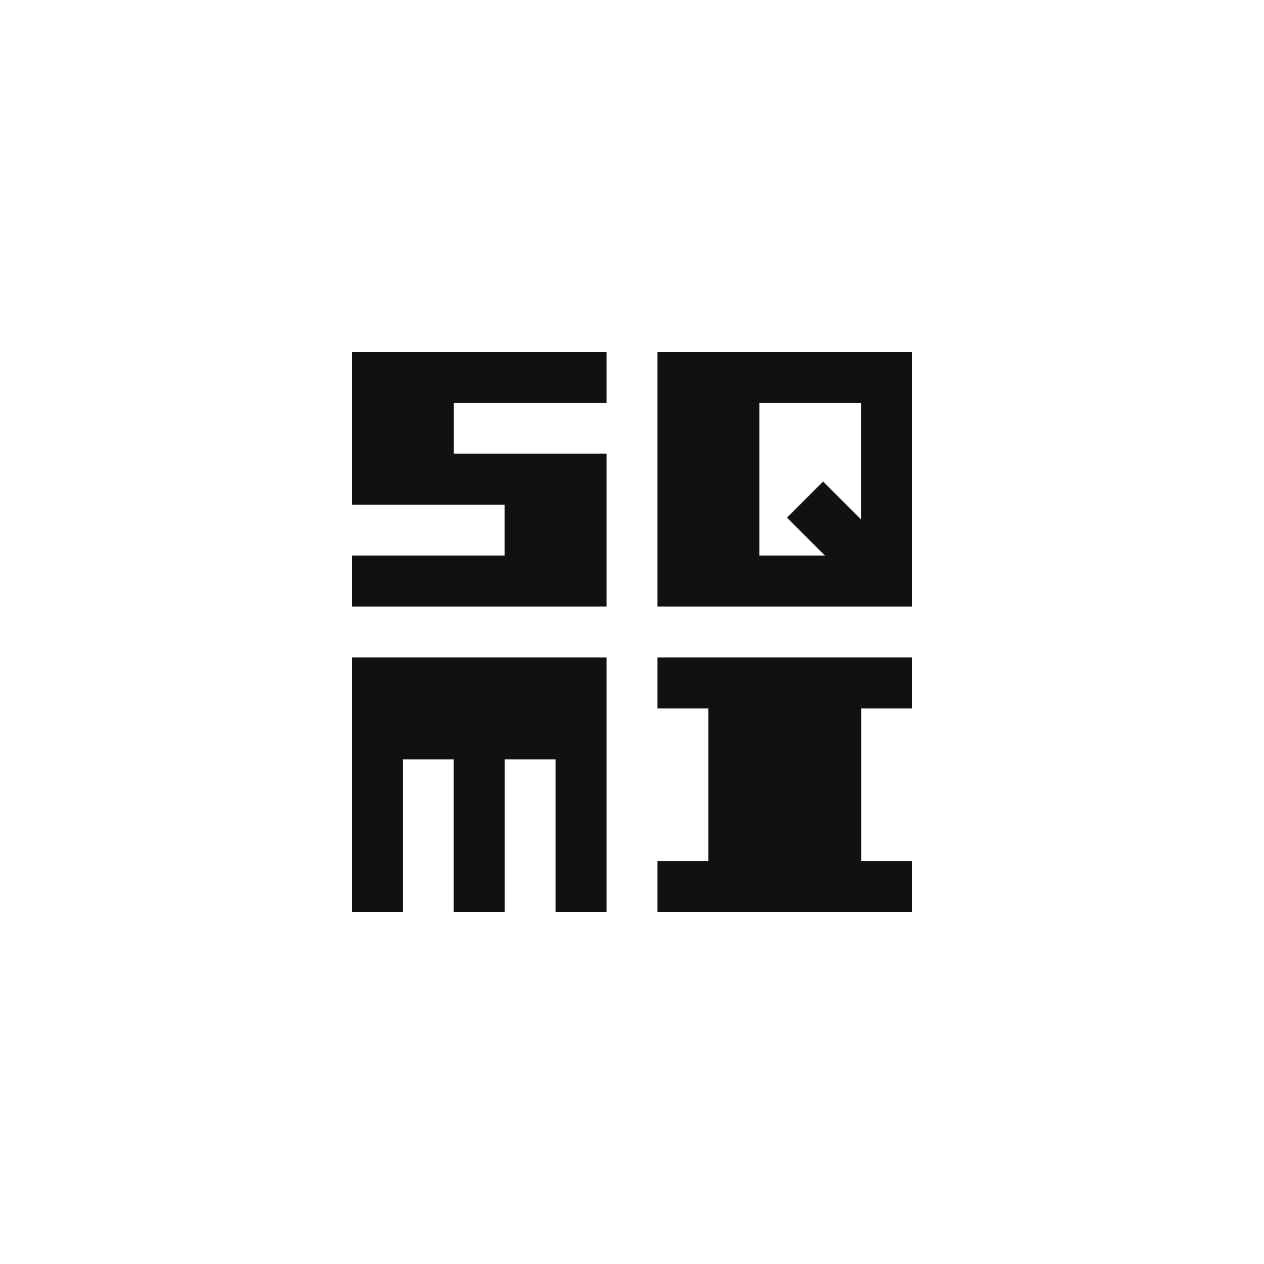 nelsoncouto-work-logos-squaremilestudio8bit-v2